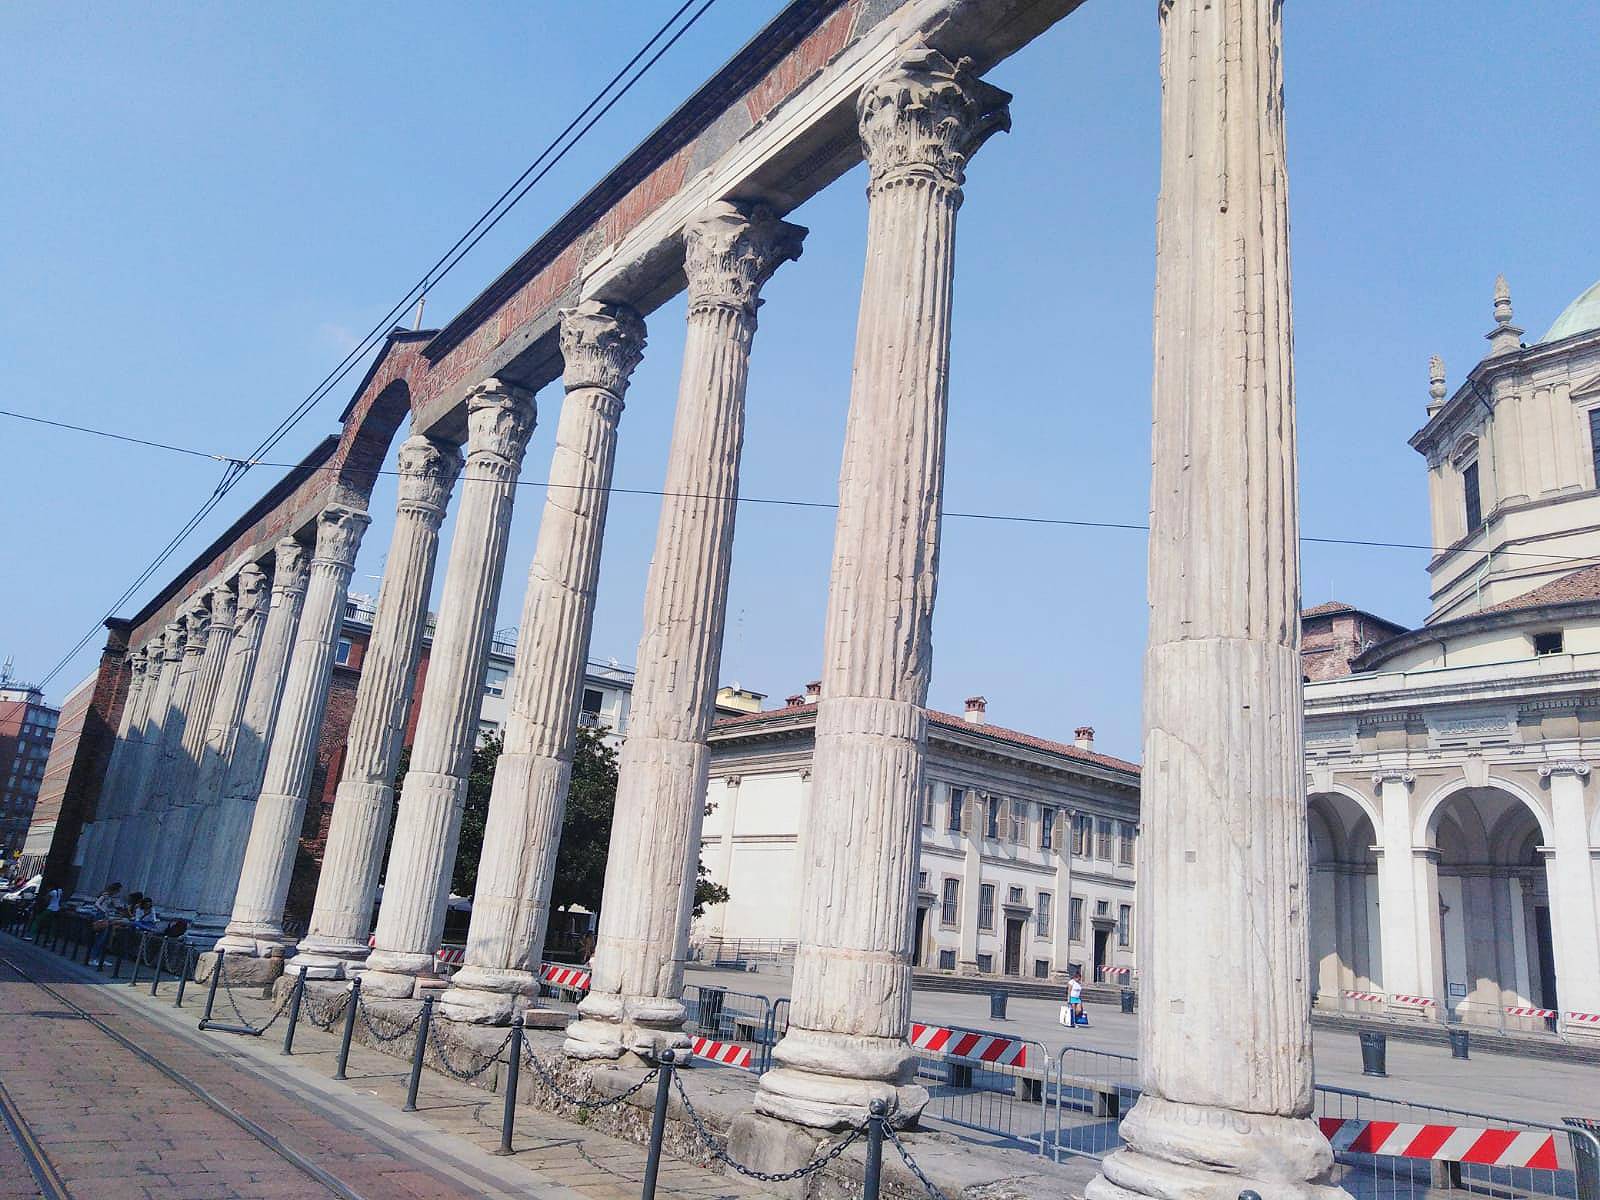 Colonne di San Lorenzo - roman columns from the 3rd century